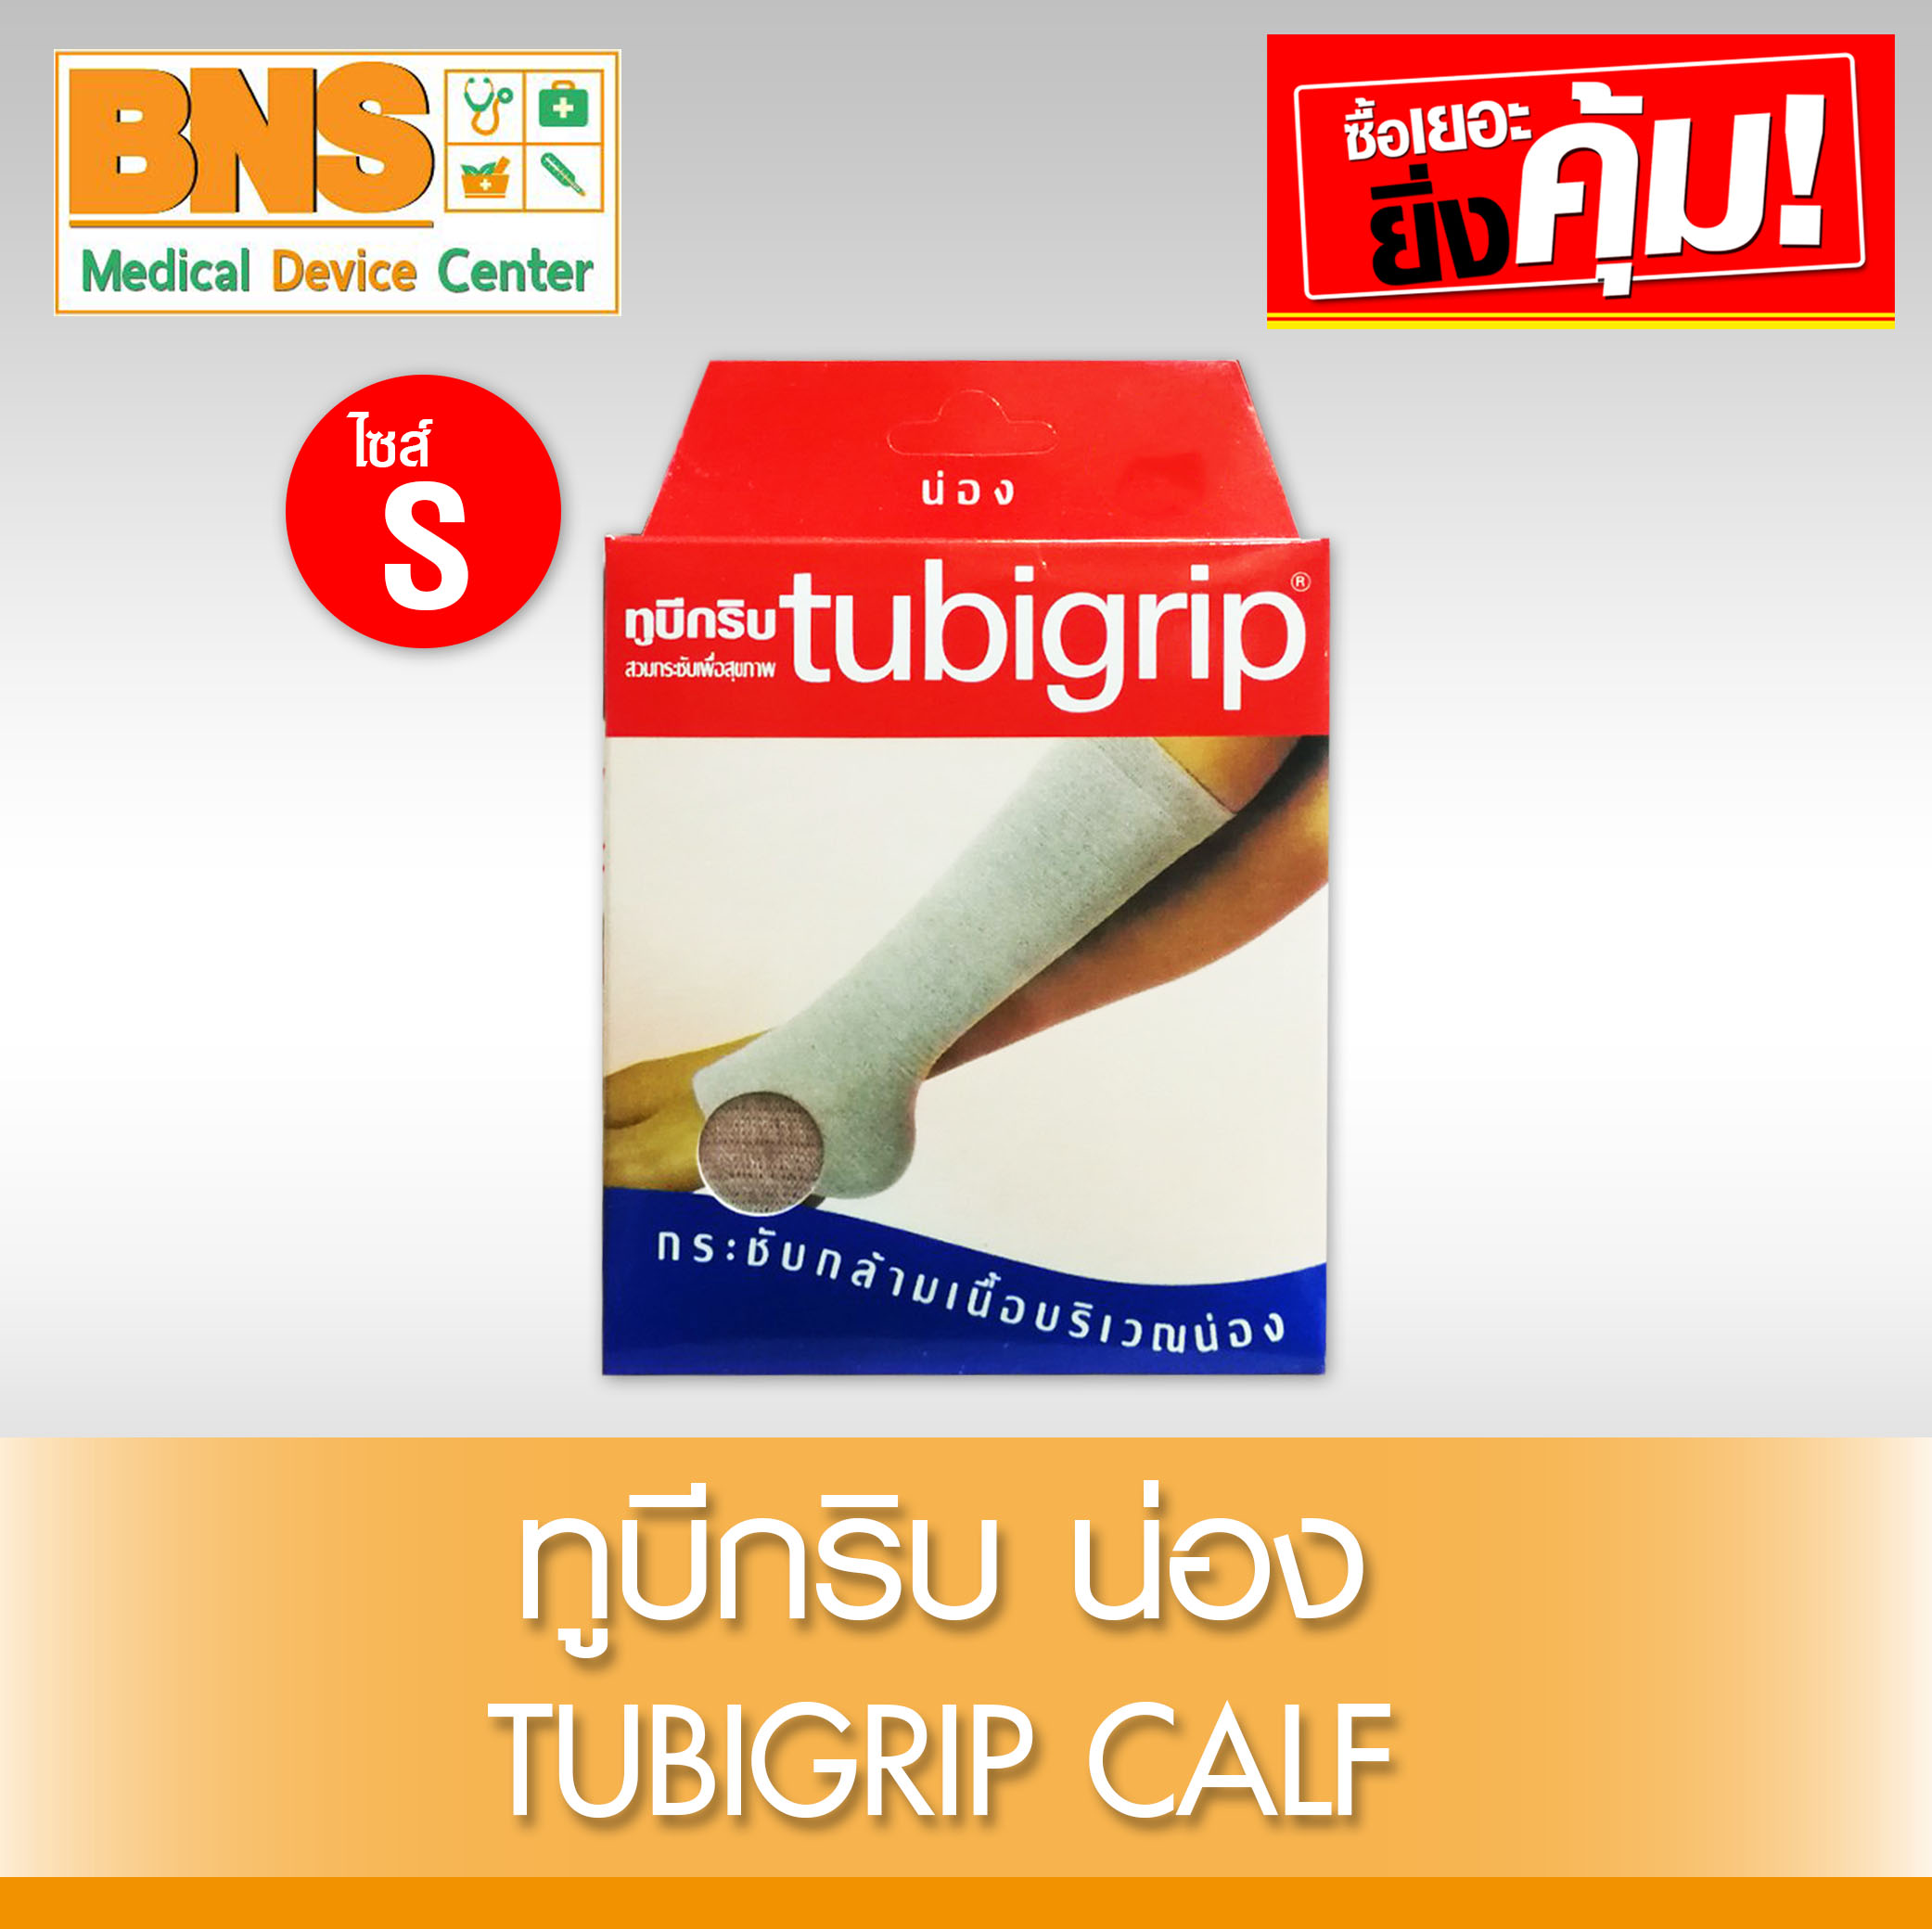 Tubigrip Calf ทูบีกริบ (น่อง) ไซร้ S (สินค้าใหม่) (ถูกที่สุด) By BNS